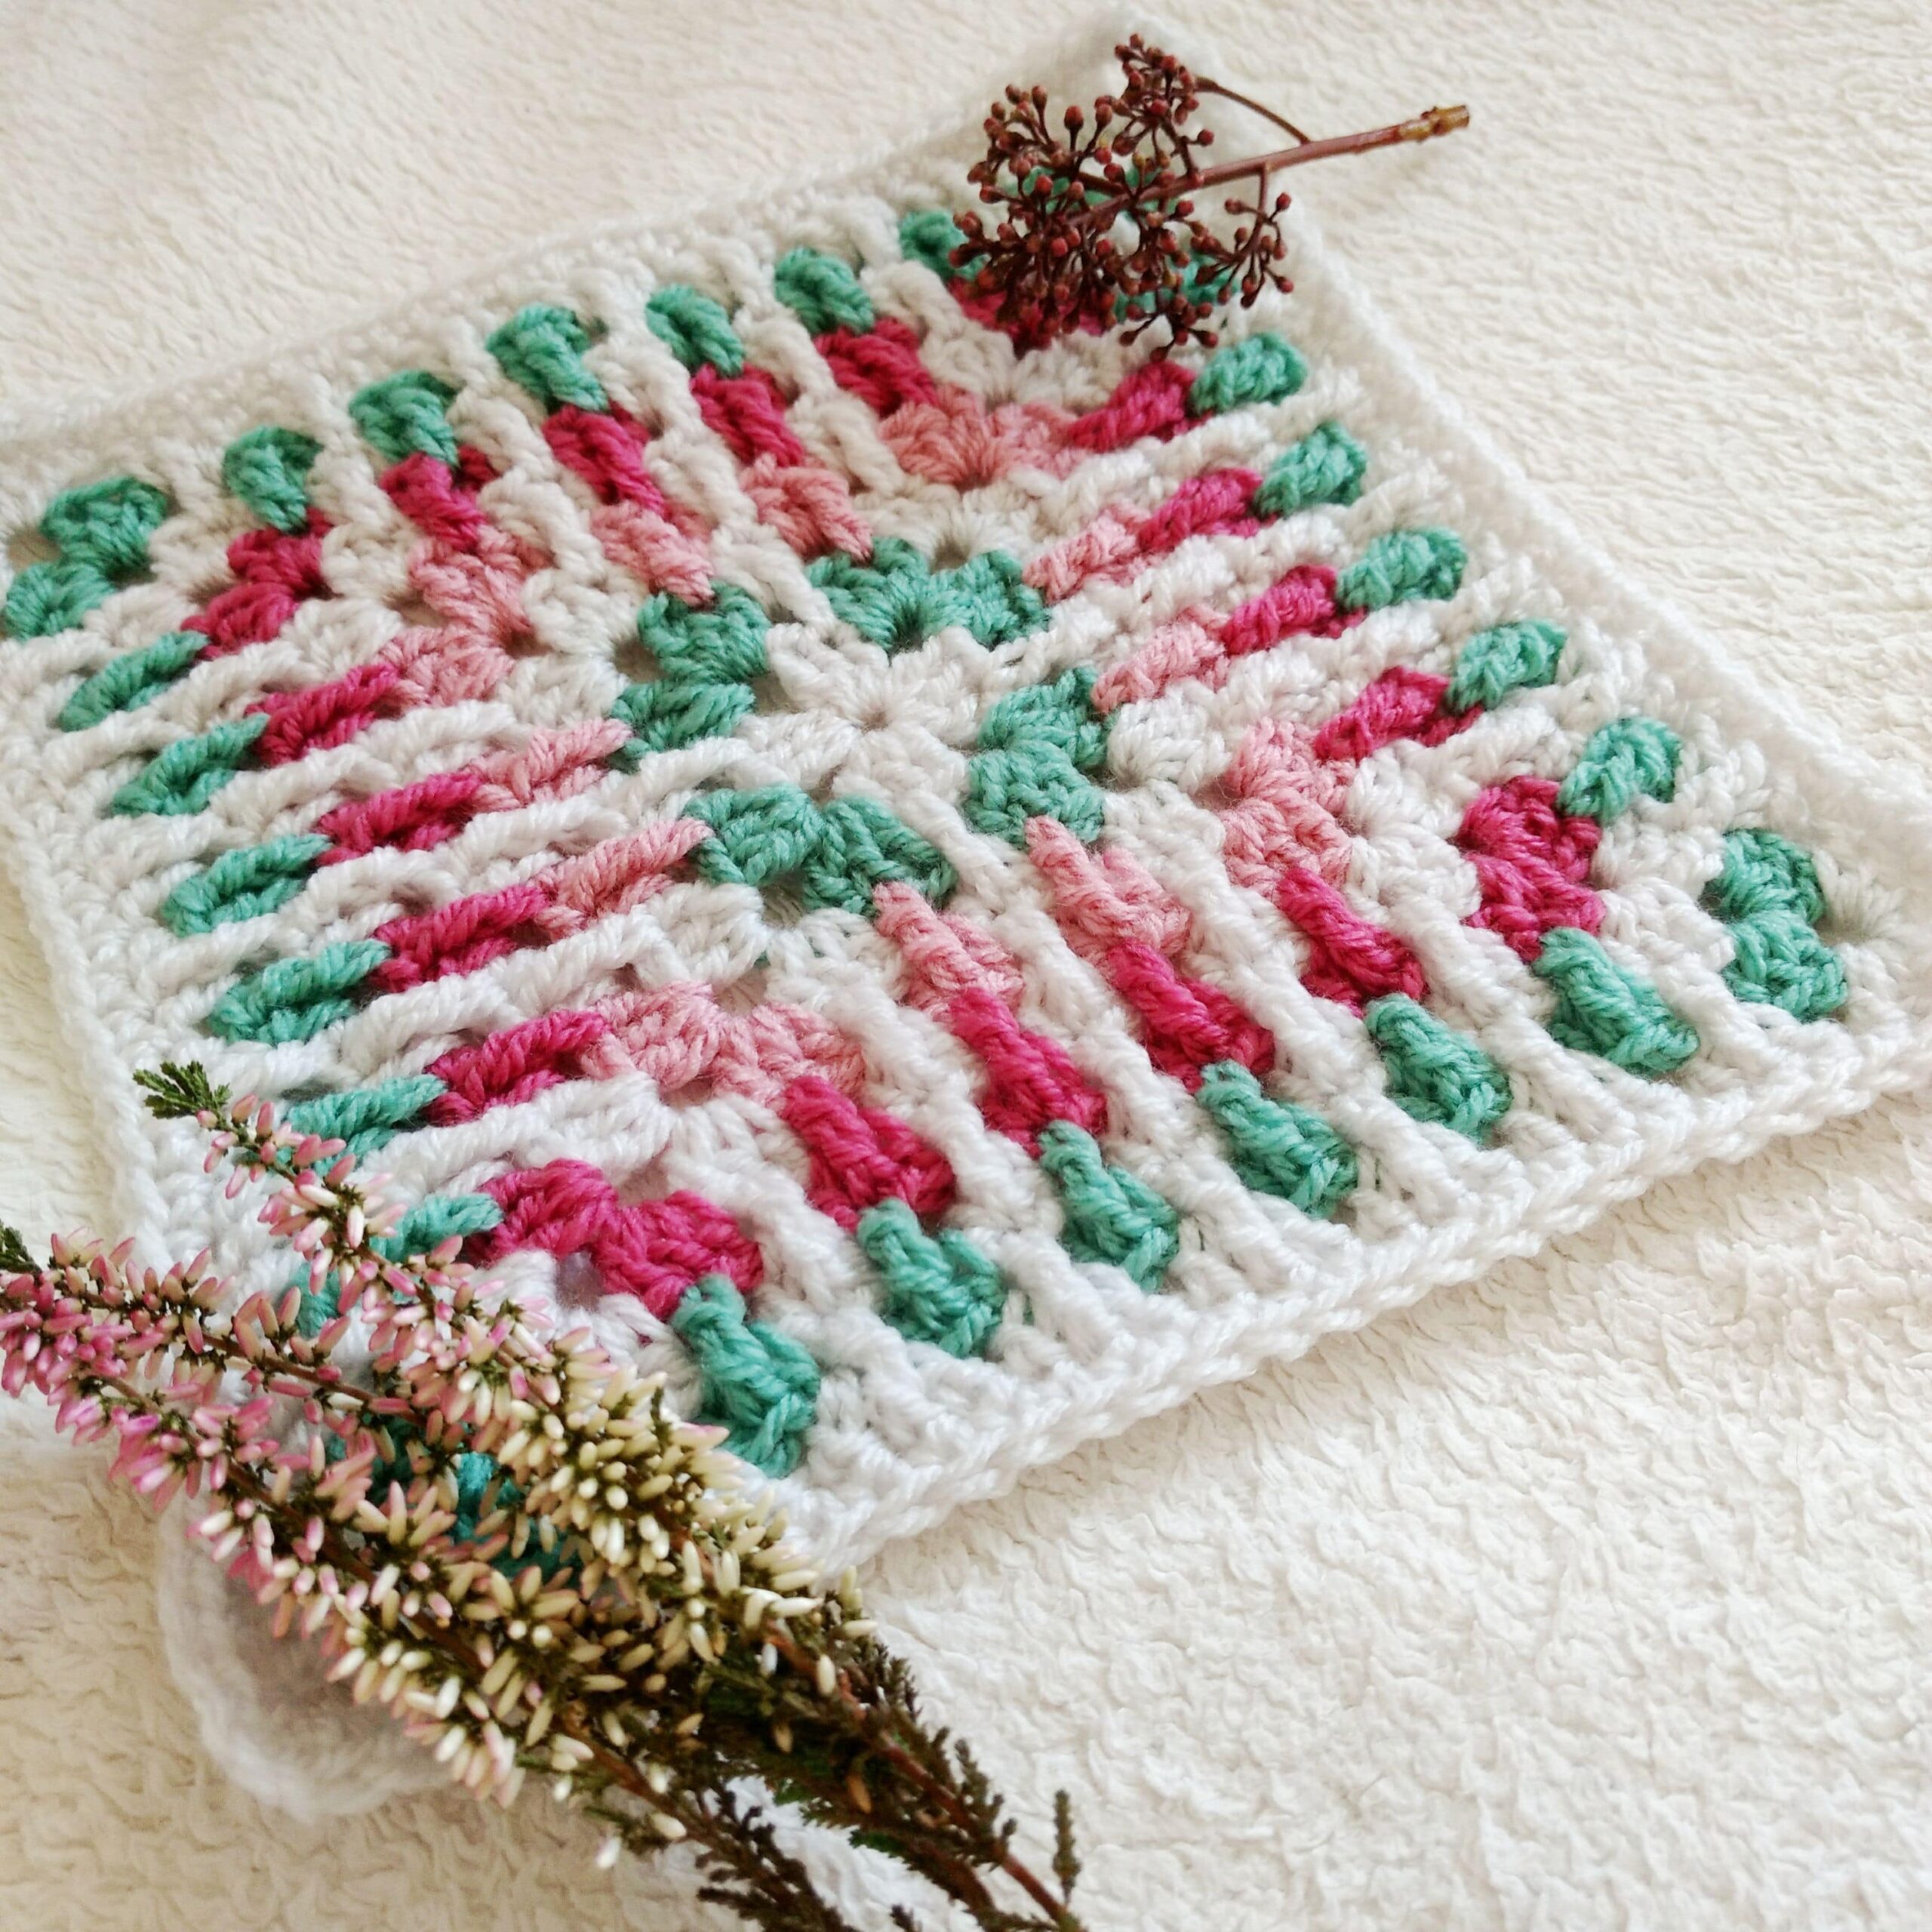 Funky Granny Square - Free crochet pattern - 2023 blanket - crochet cloudberry